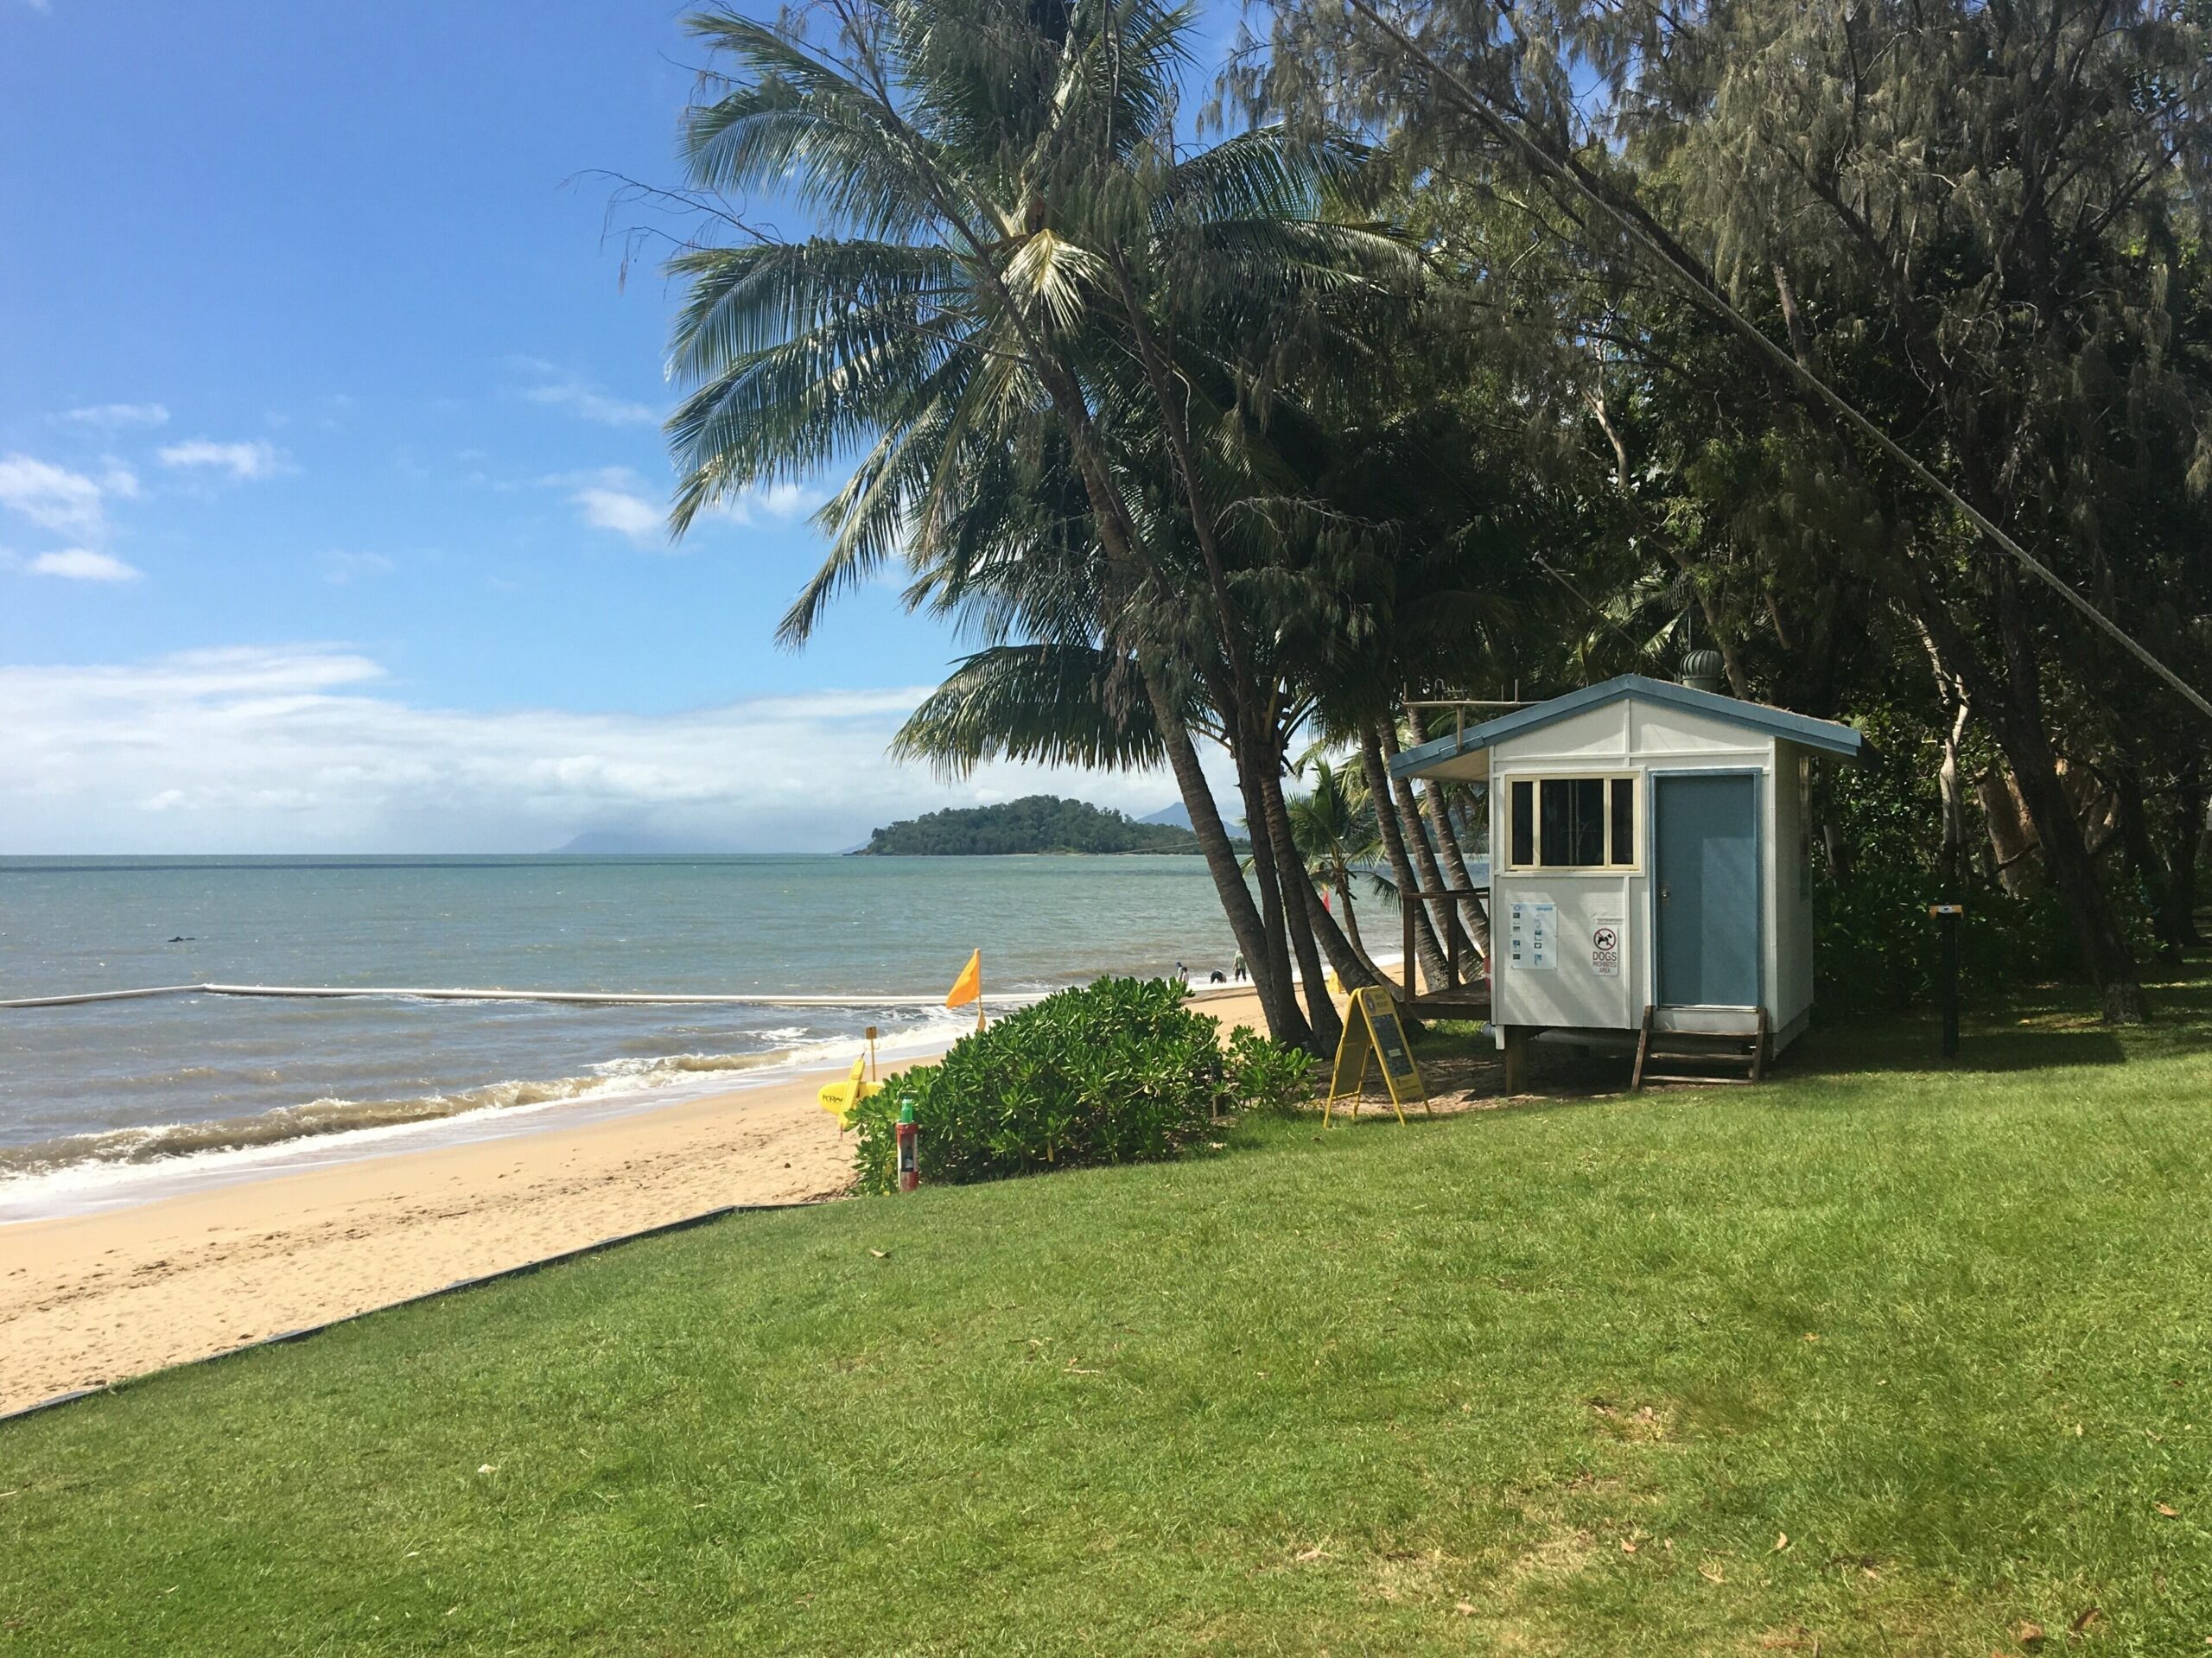 Have a 'beach Break' at the Best Beach in Cairns!